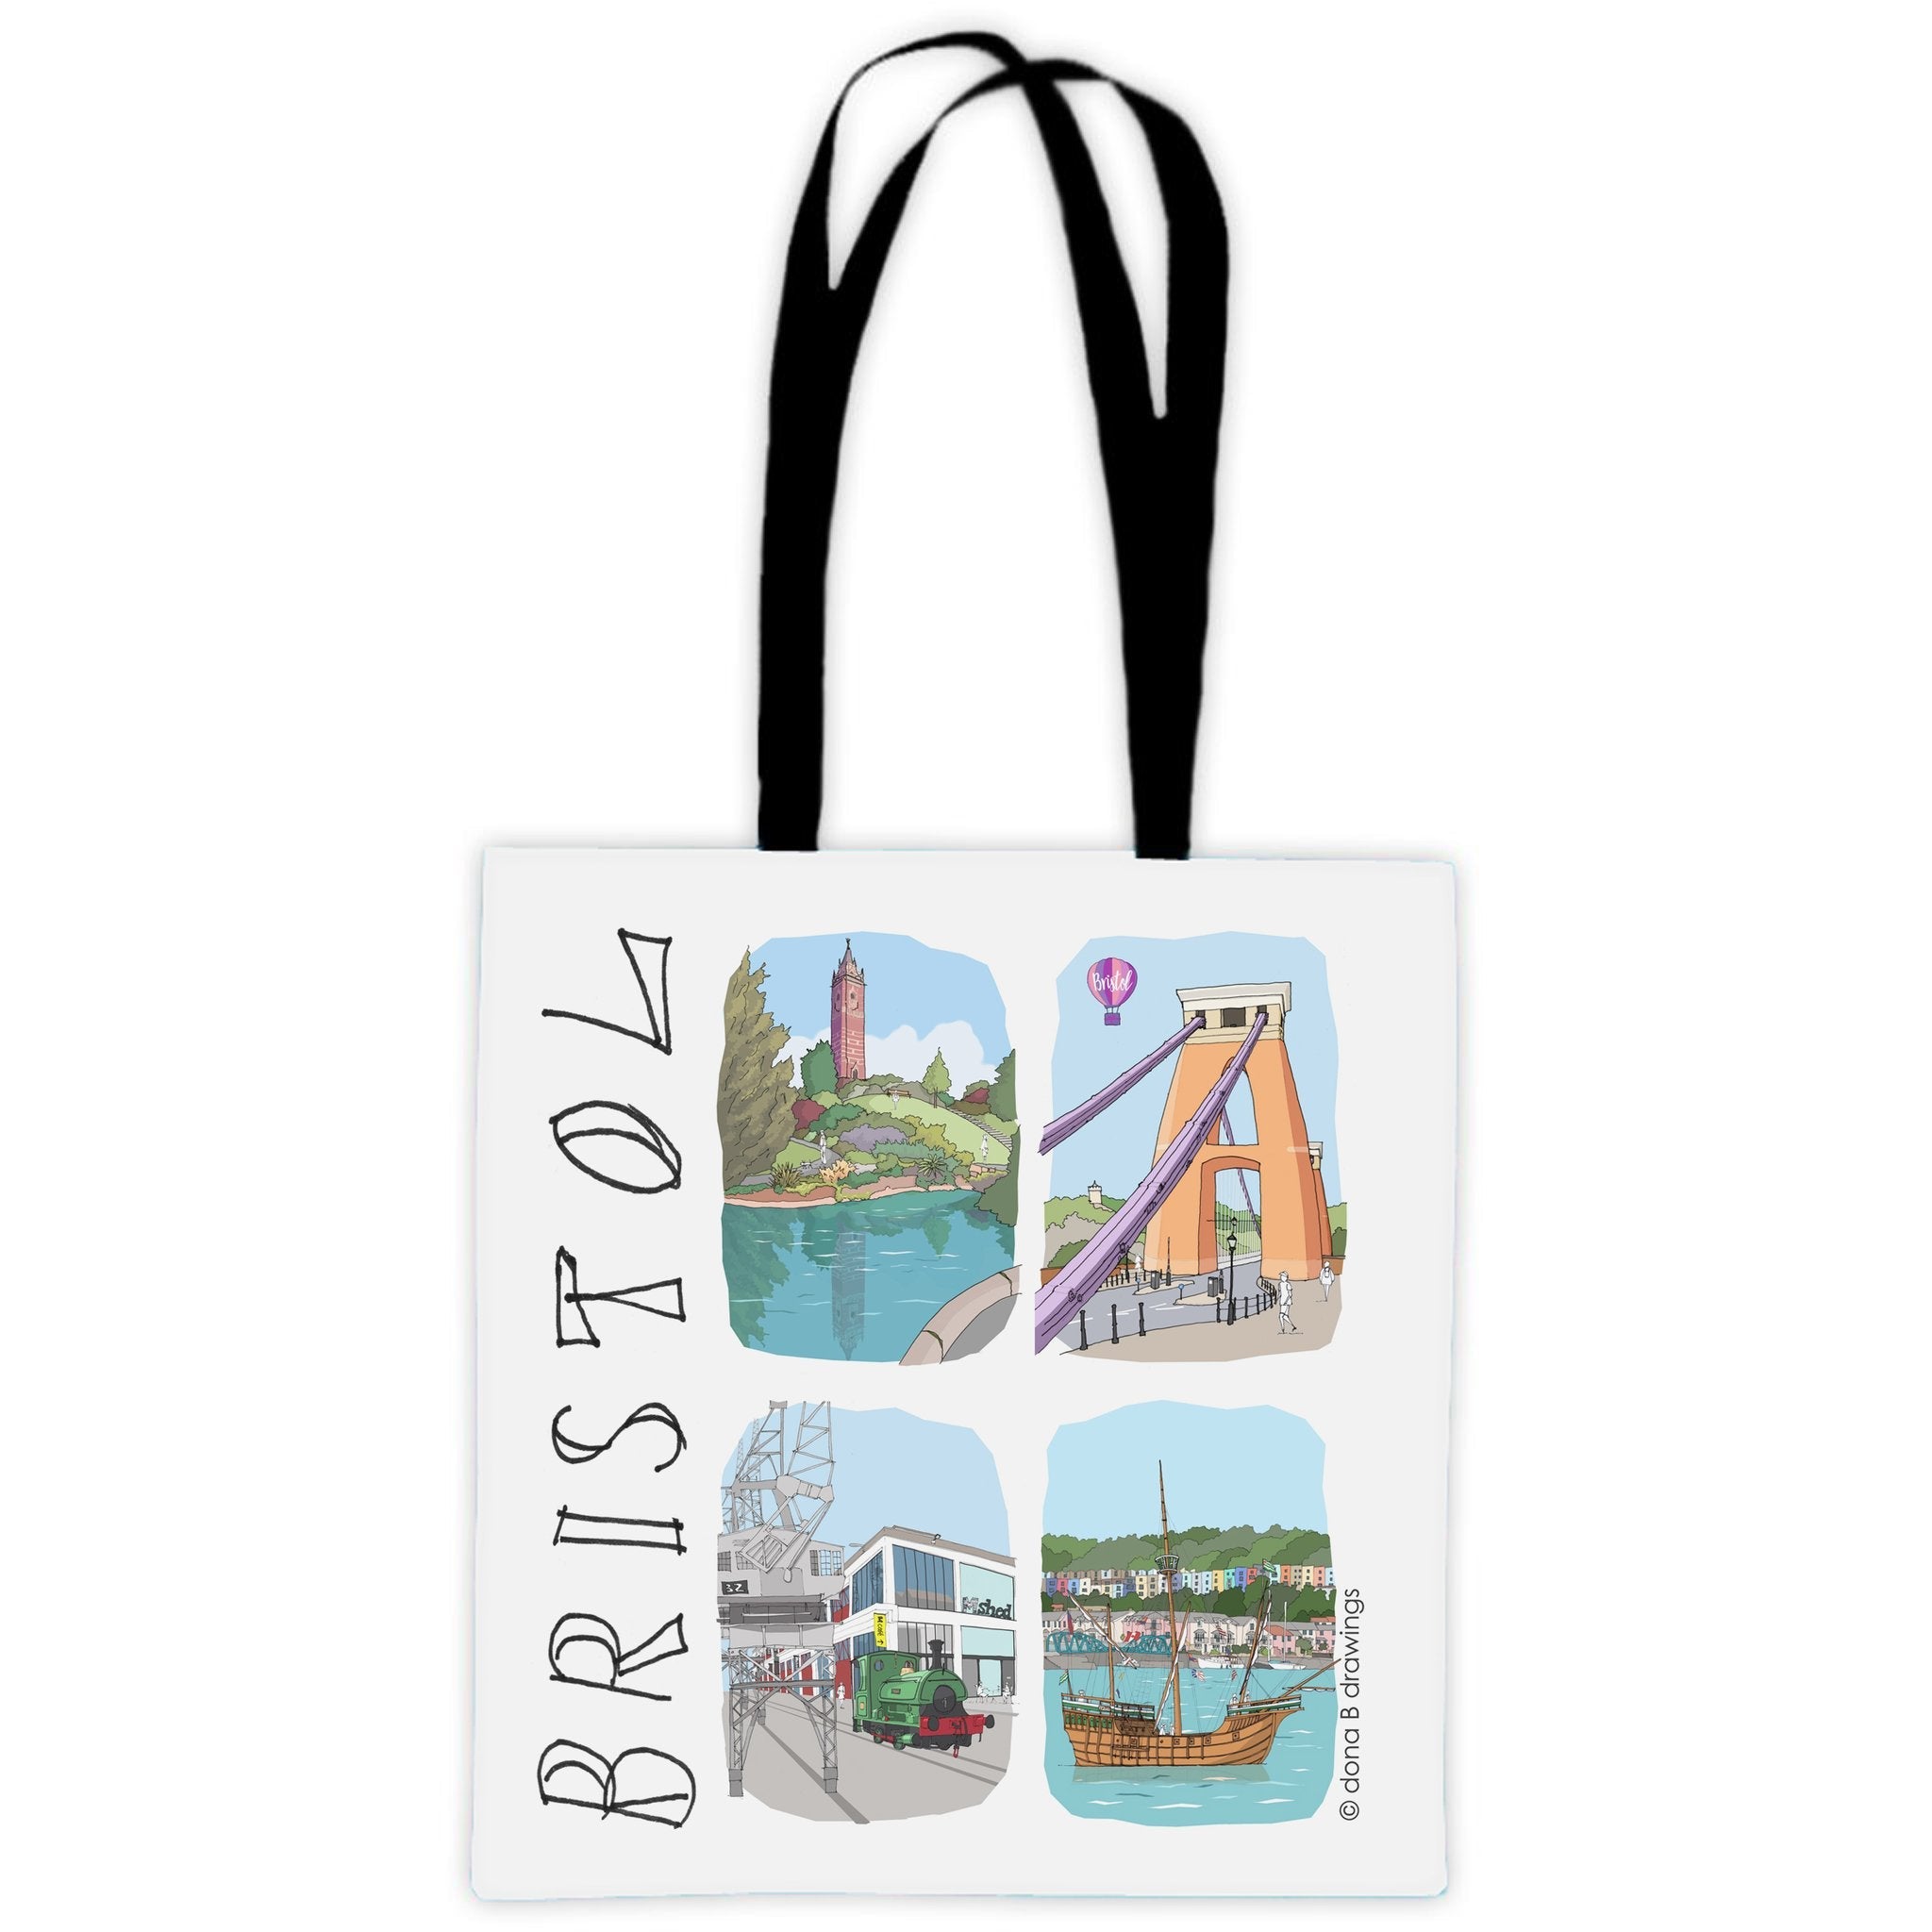 Bristol tote bag featuring famous landmarks including the Clifton Suspension Bridge